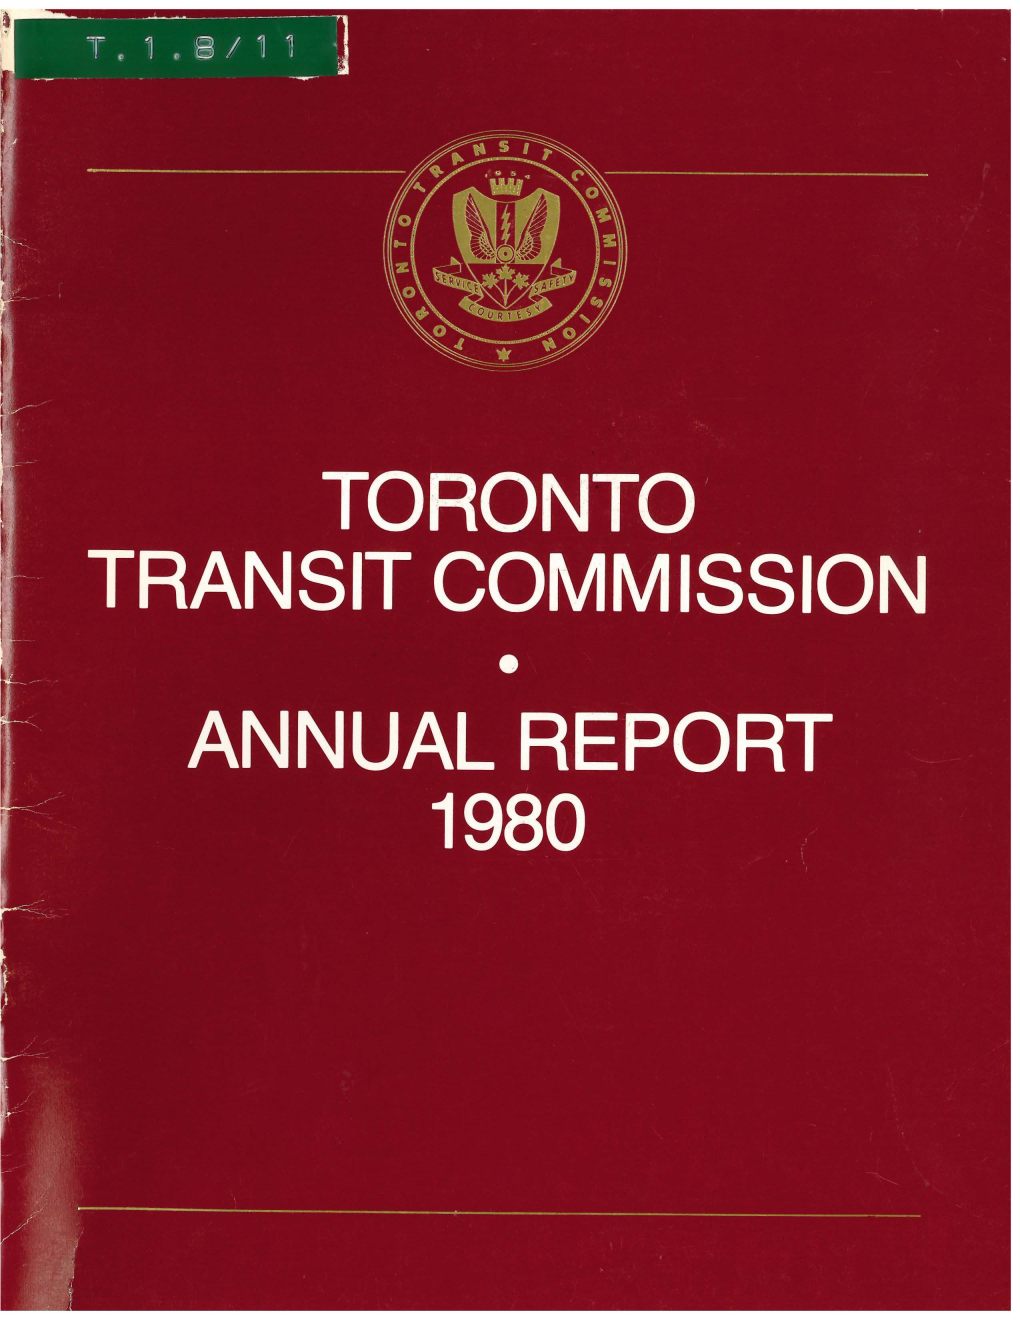 1980 Annual Report